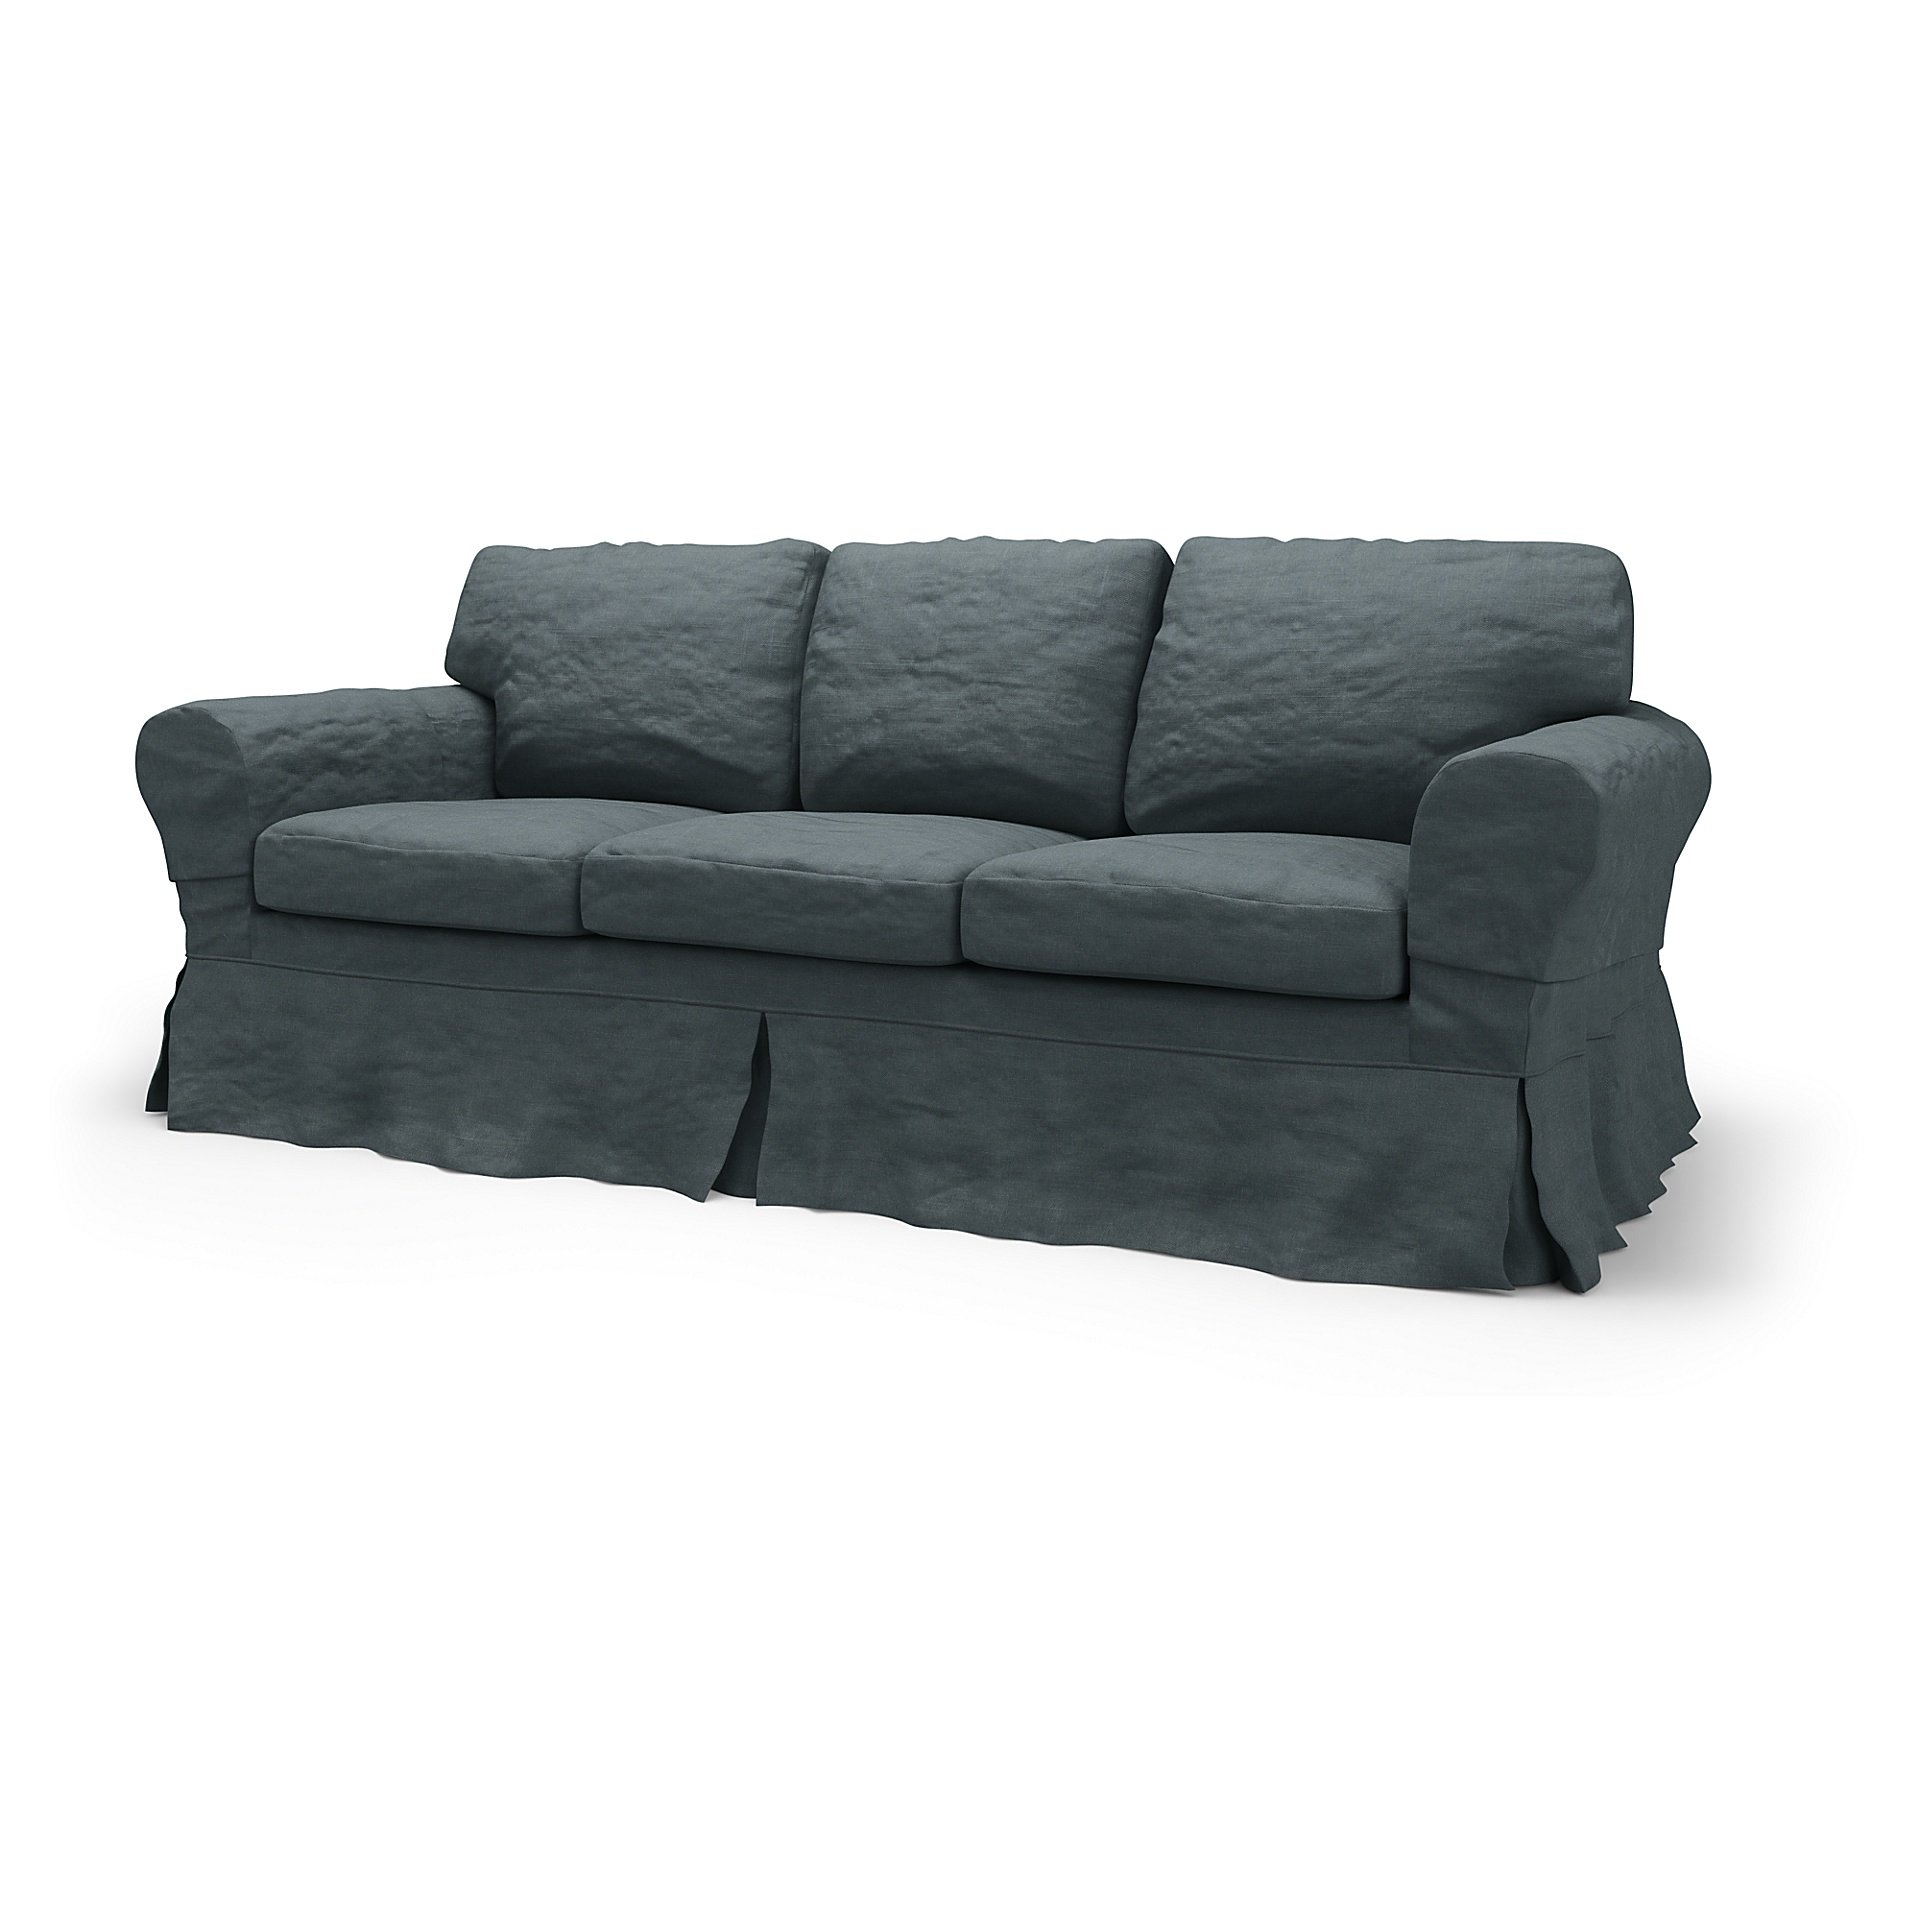 IKEA - Ektorp 3 Seater Sofa Bed Cover, Graphite Grey, Linen - Bemz